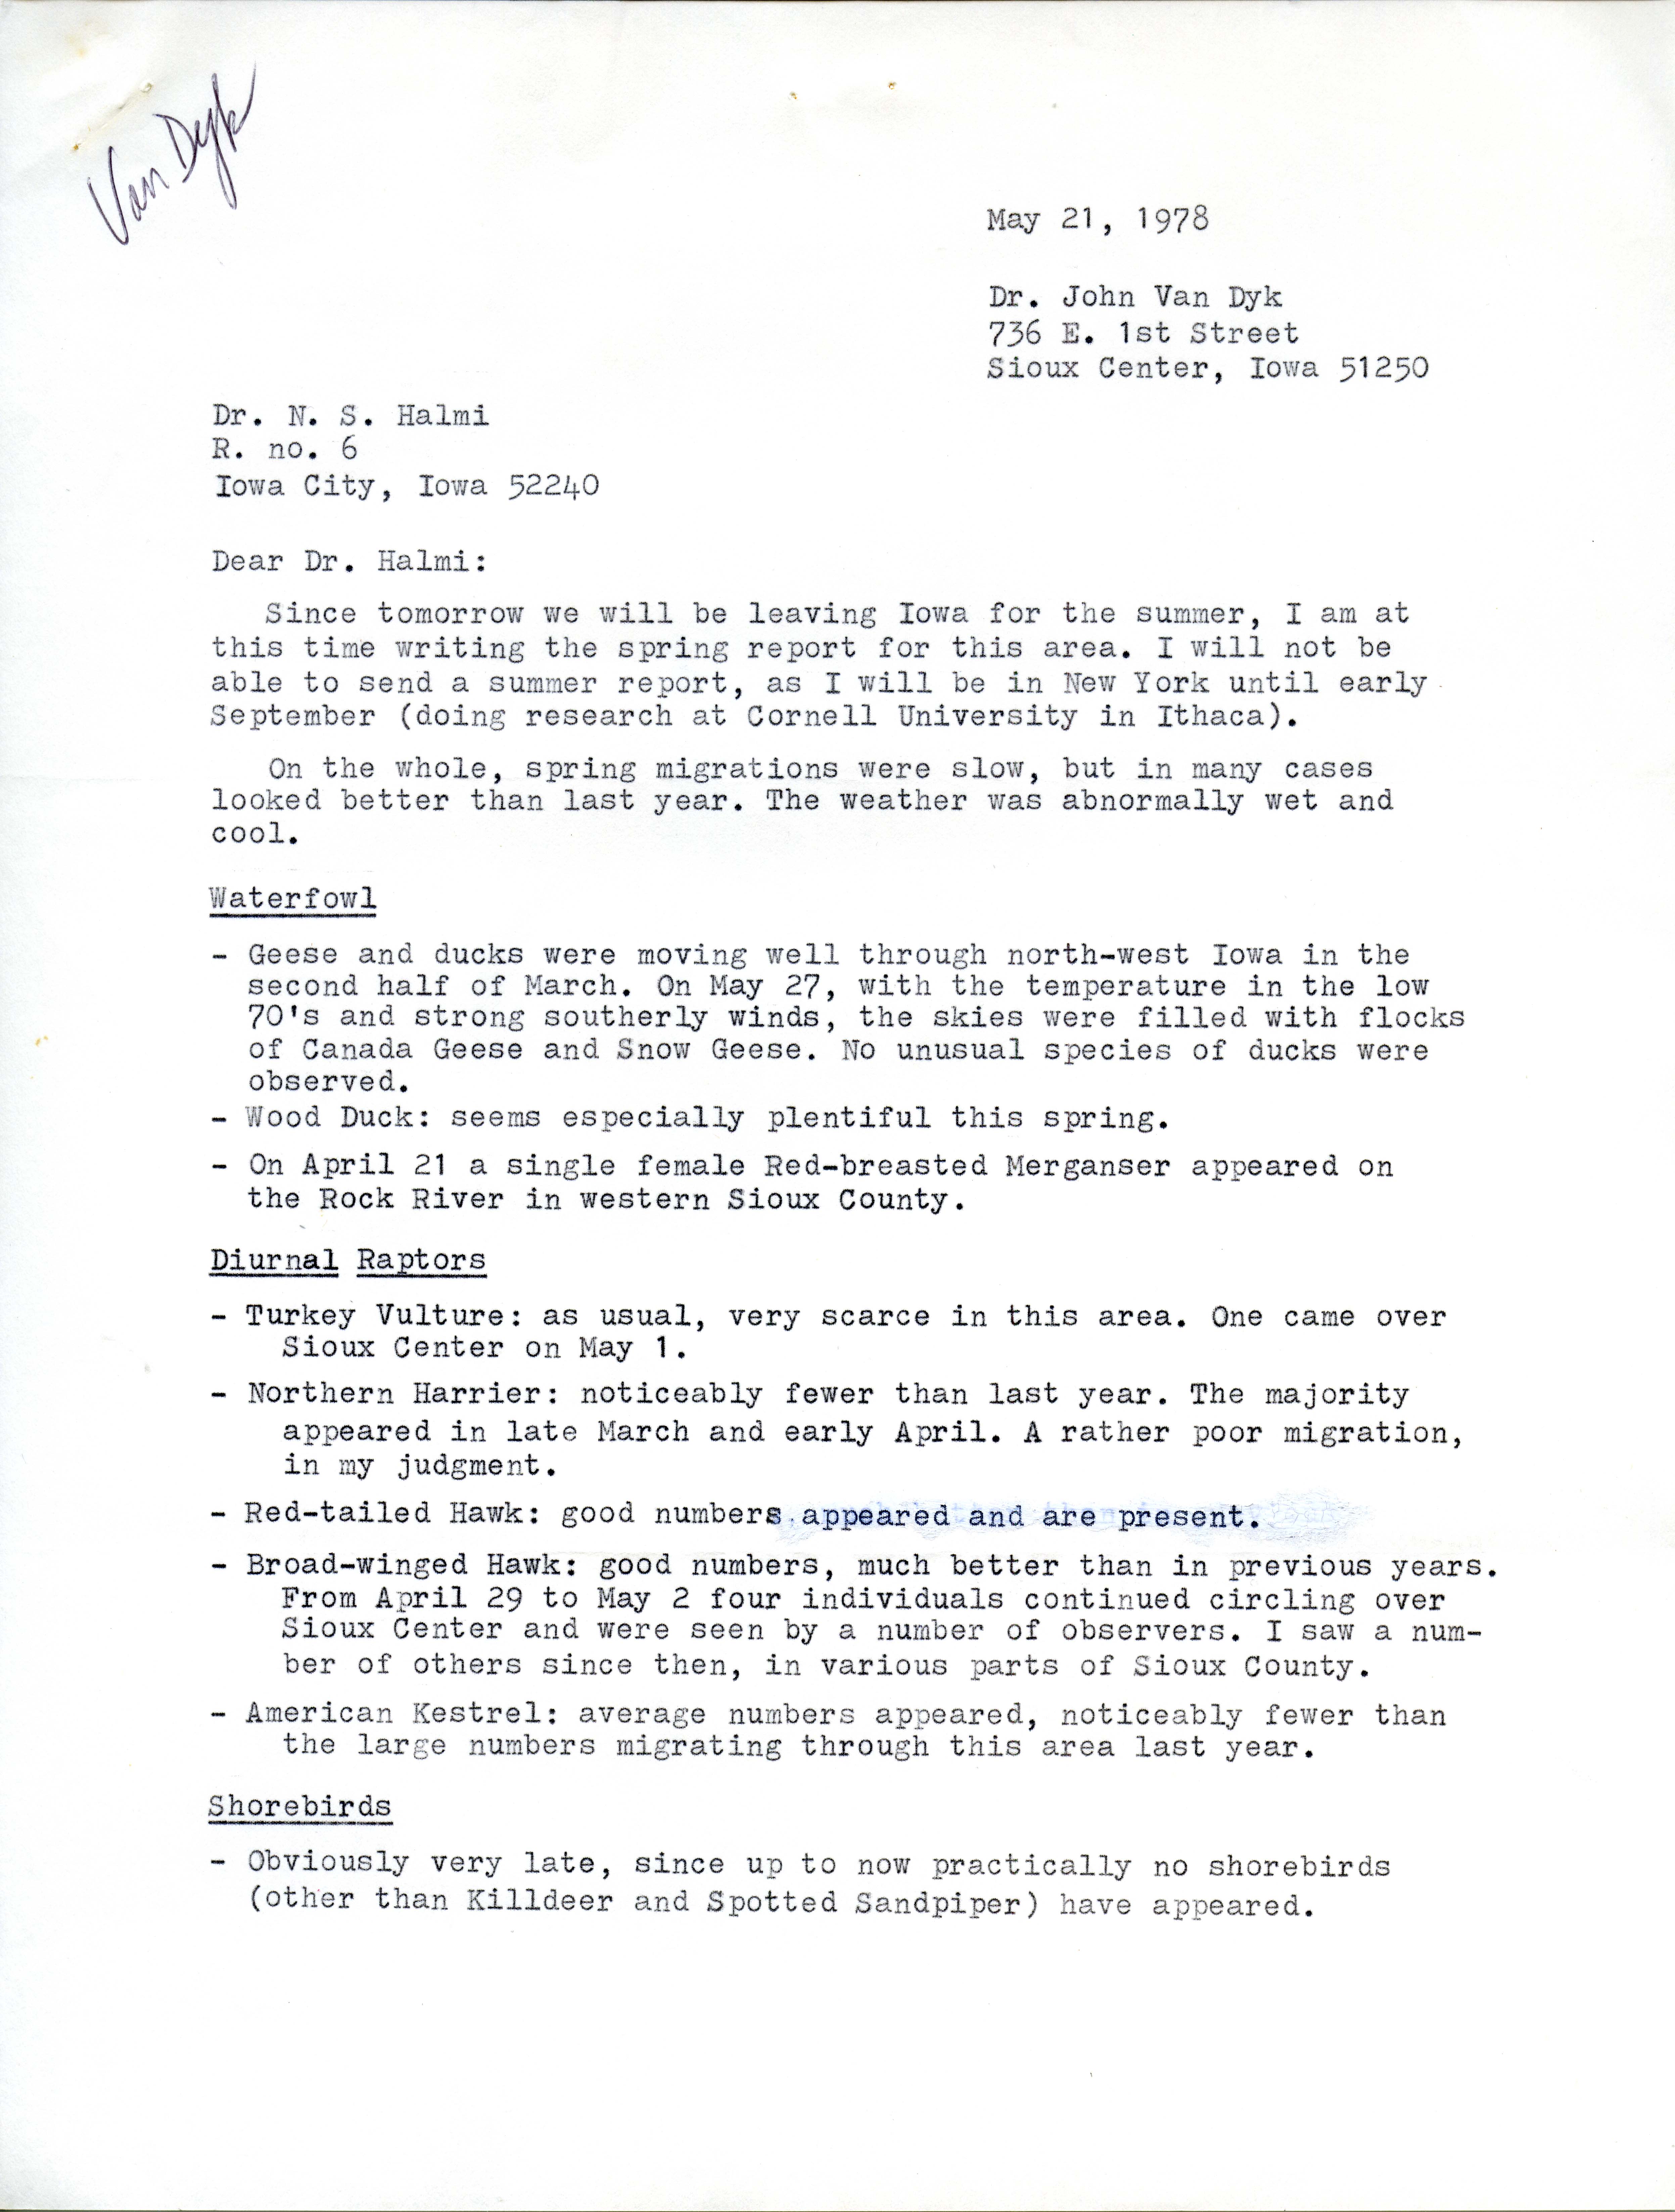 Jon Van Dyk letter to Nicholas S. Halmi regarding bird sightings, May 21, 1978